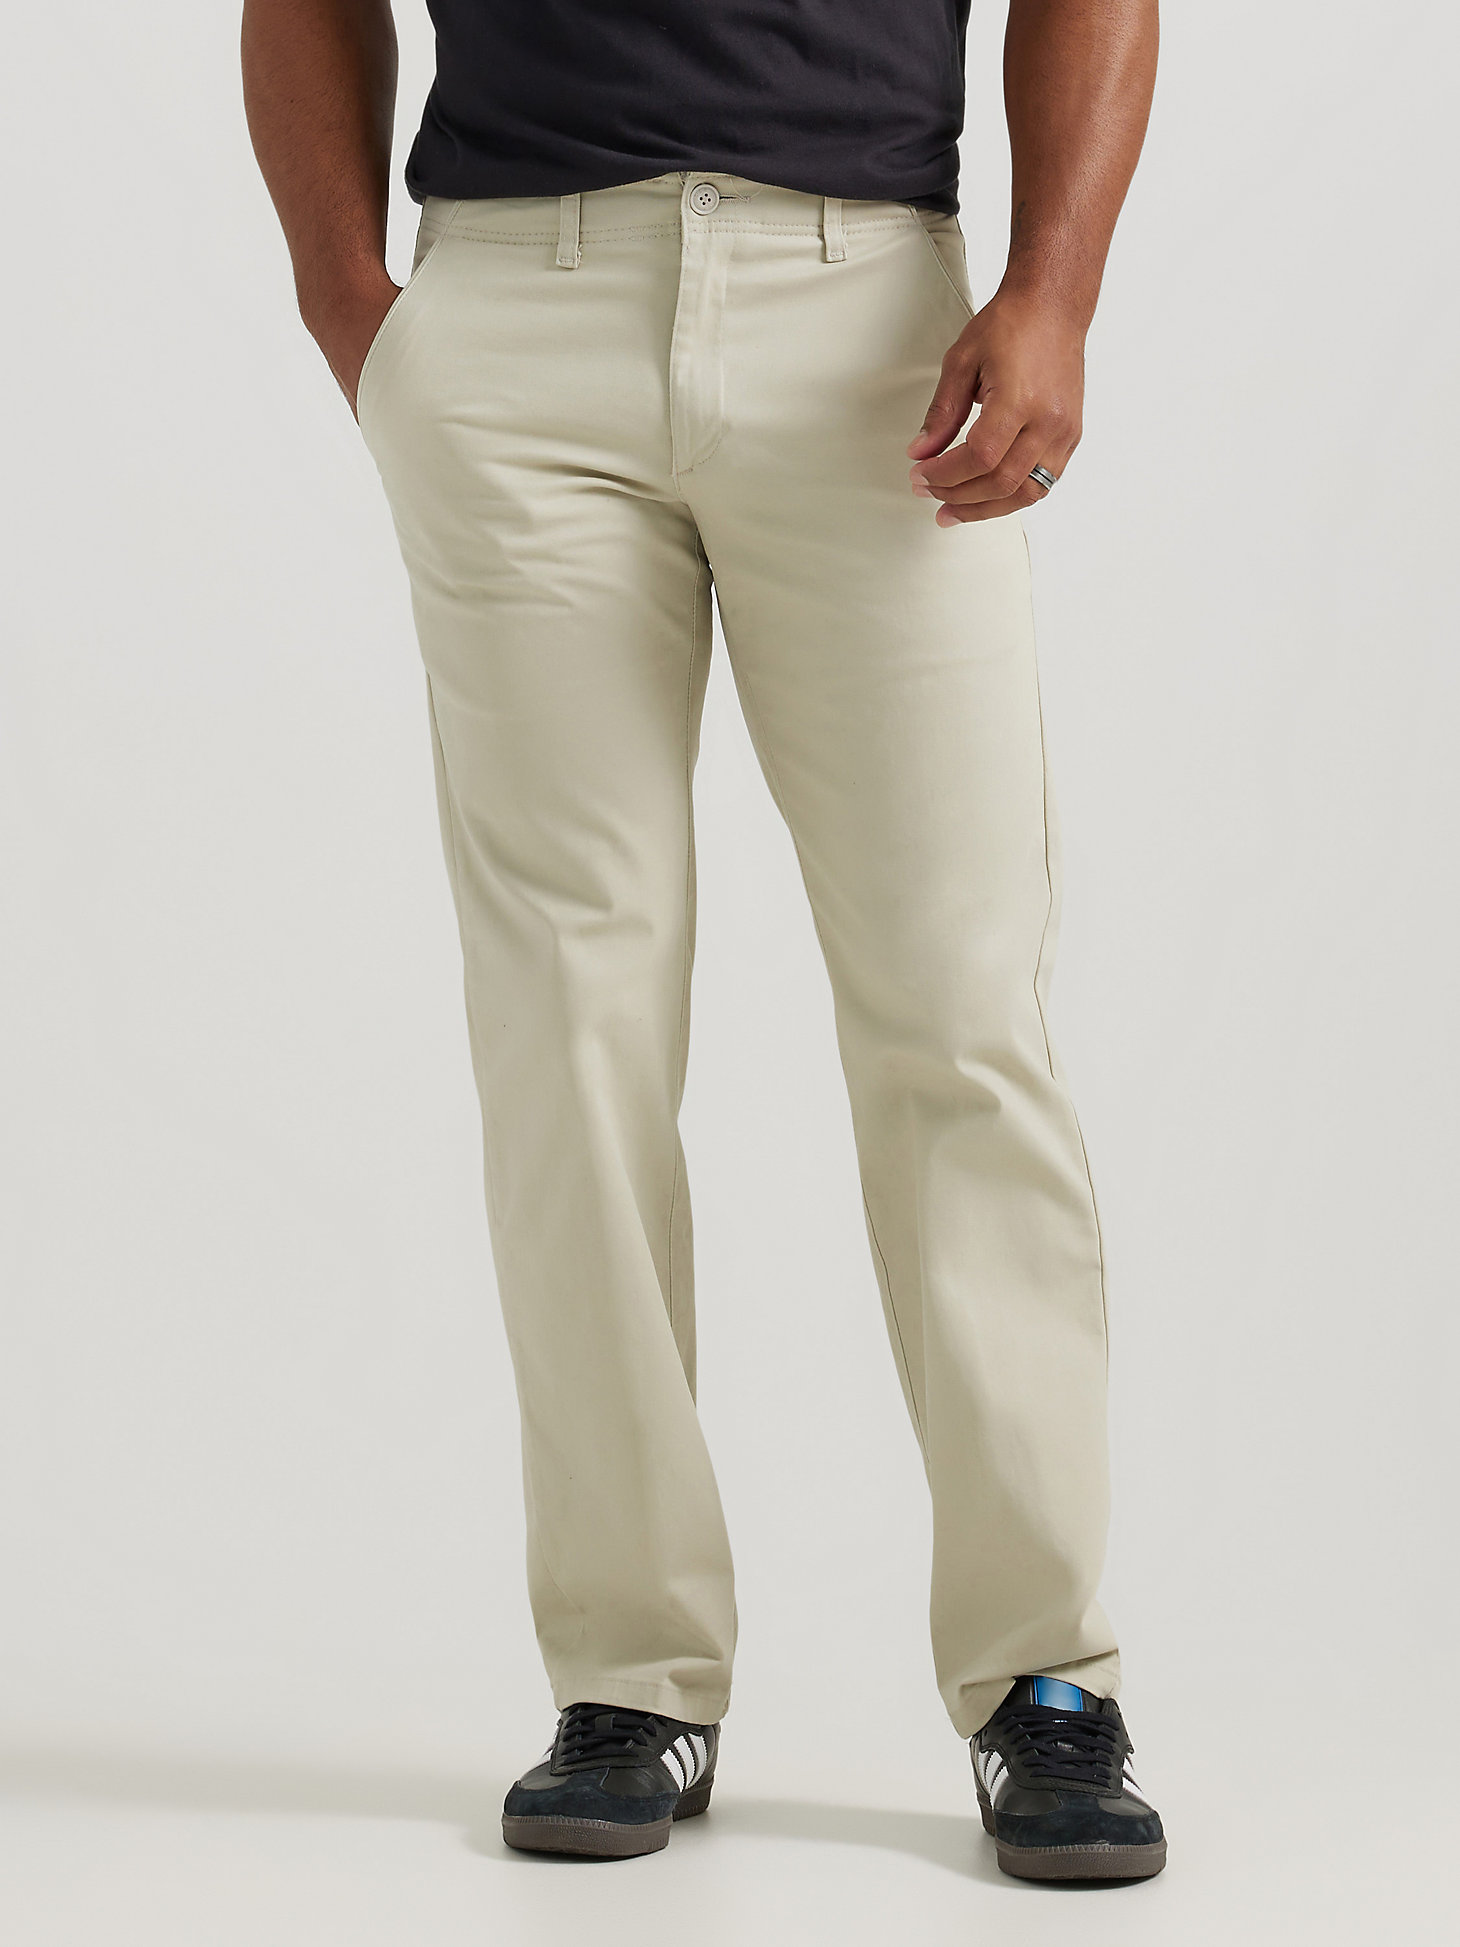 Navy Blue 48                  EU MEN FASHION Trousers Strech discount 87% Mercer Chino slacks 